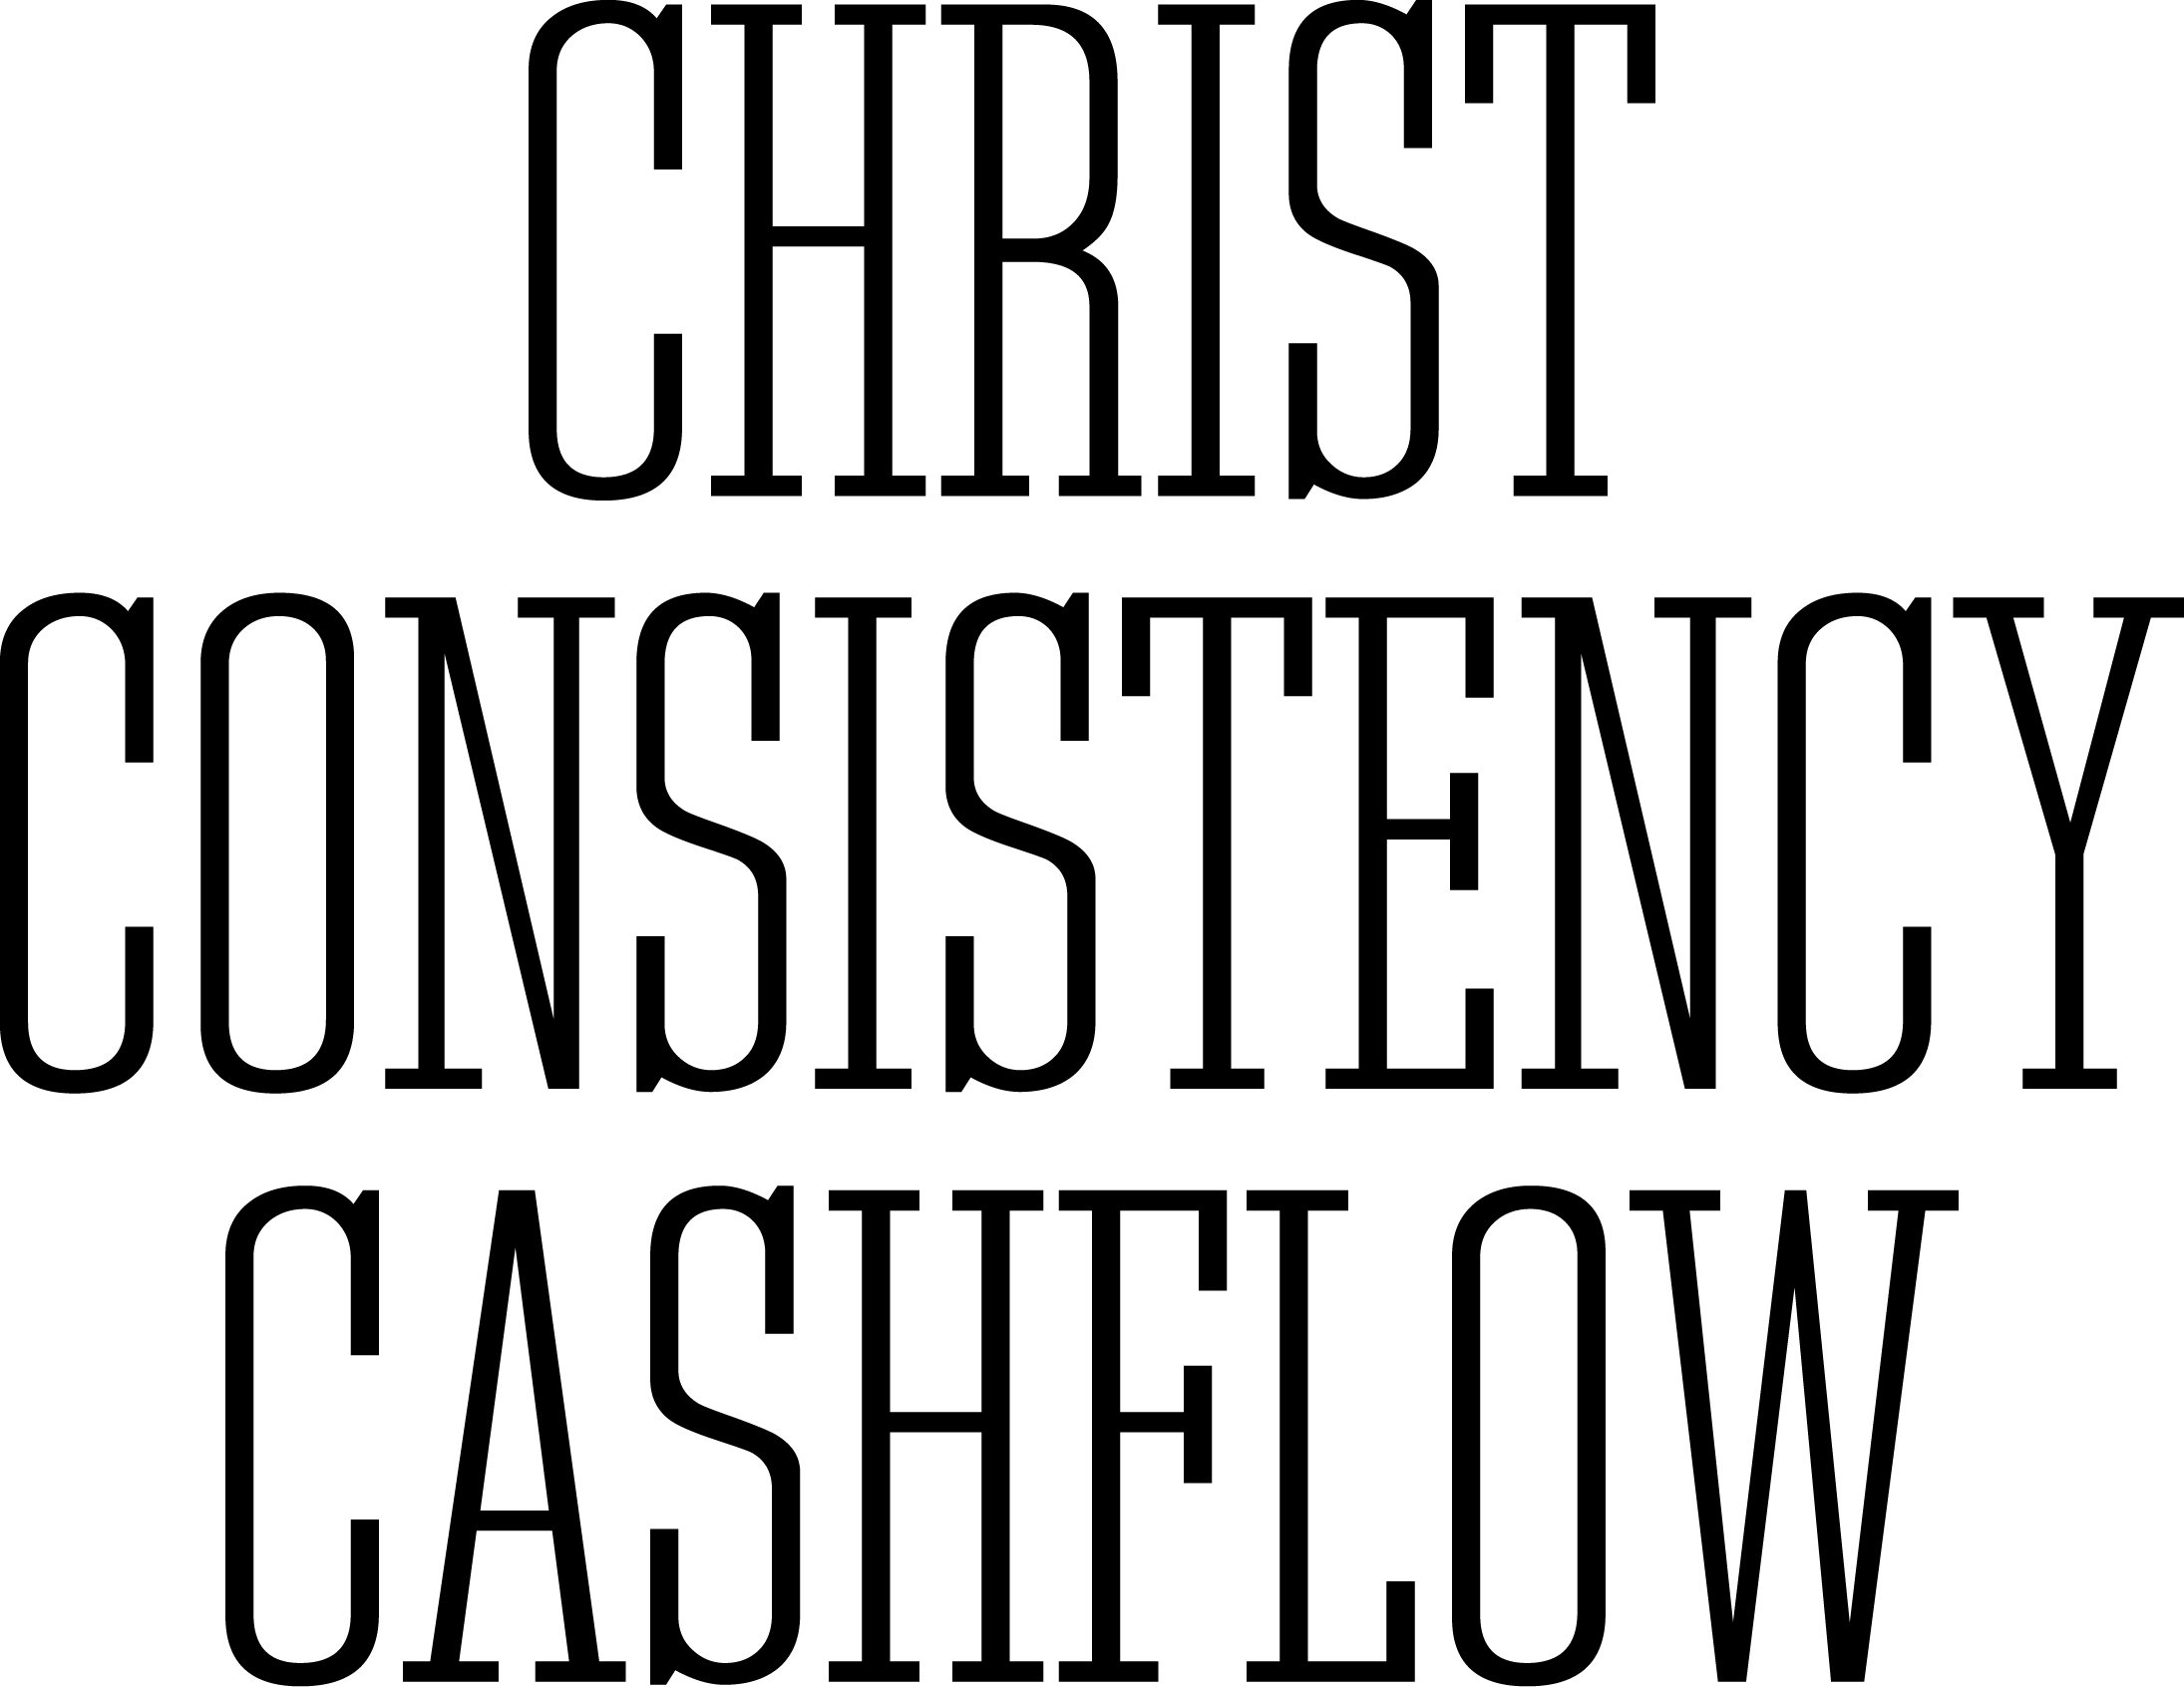  CHRIST CONSISTENCY CASHFLOW